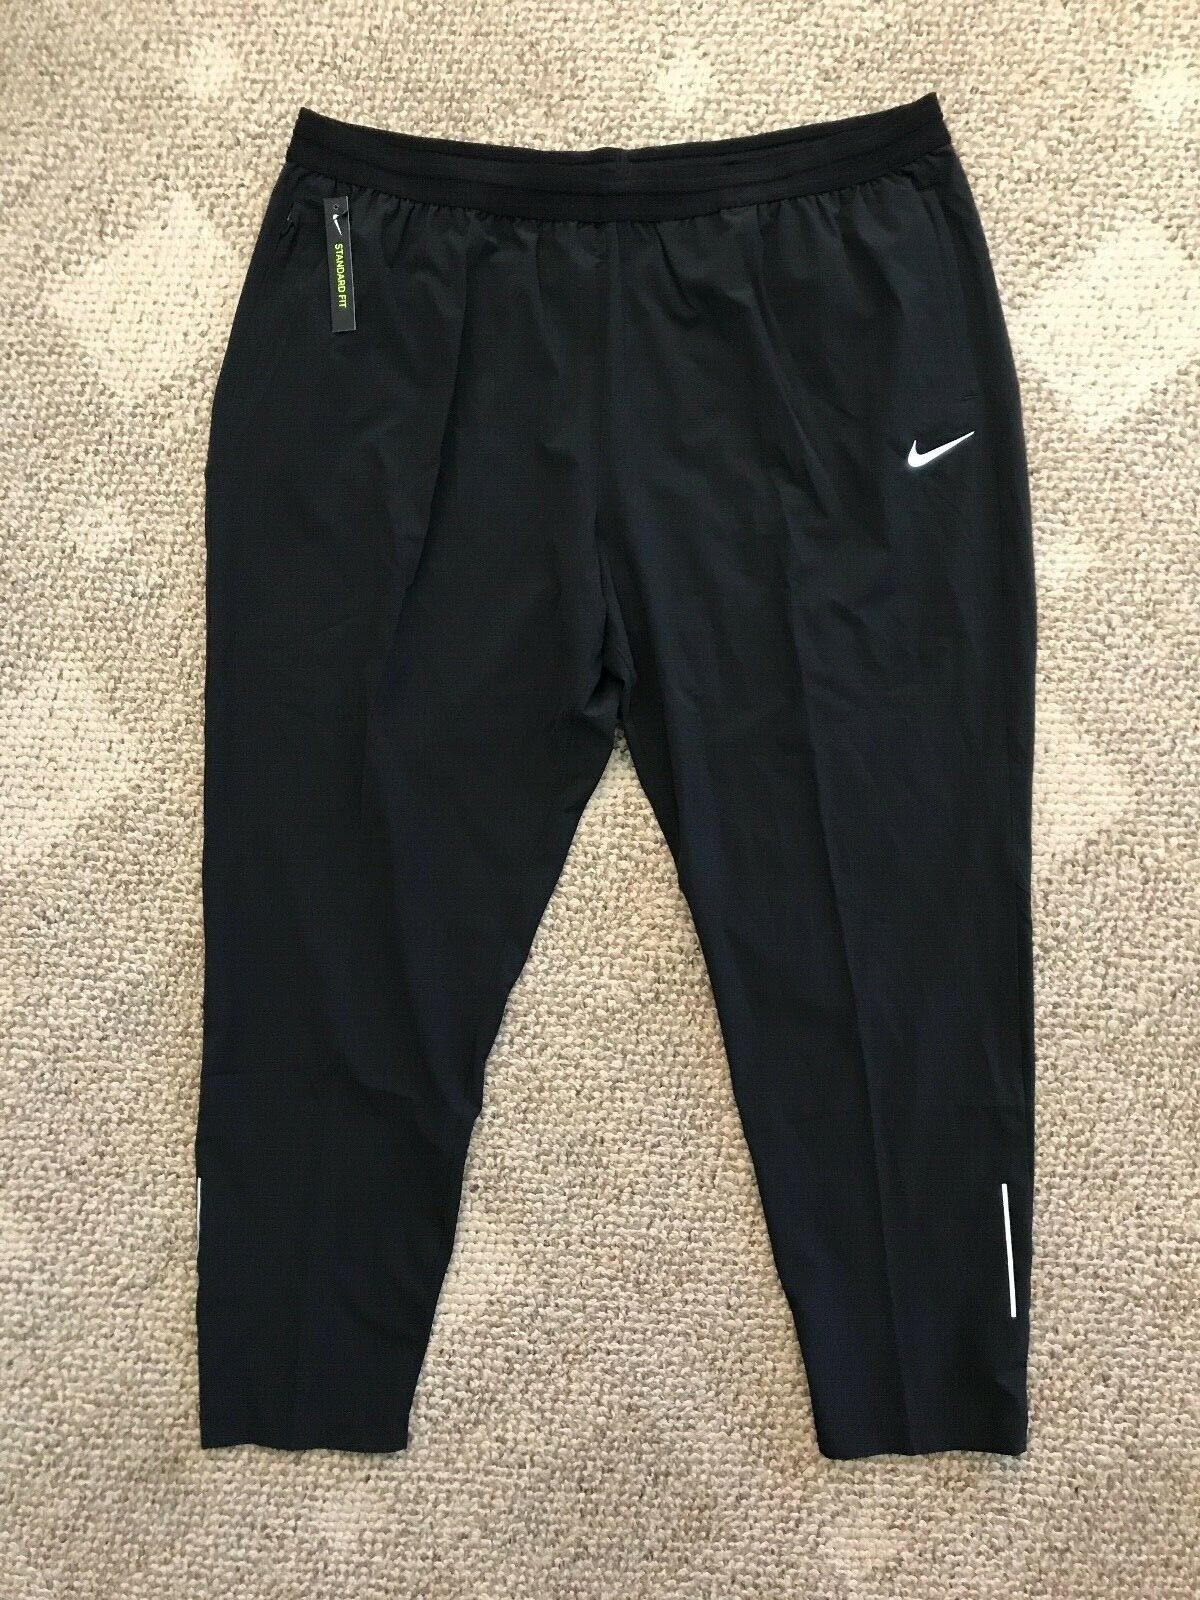 Nike Flex Essential Women's 7/8 Running Pants Black Size XL 928605-010 for  sale online